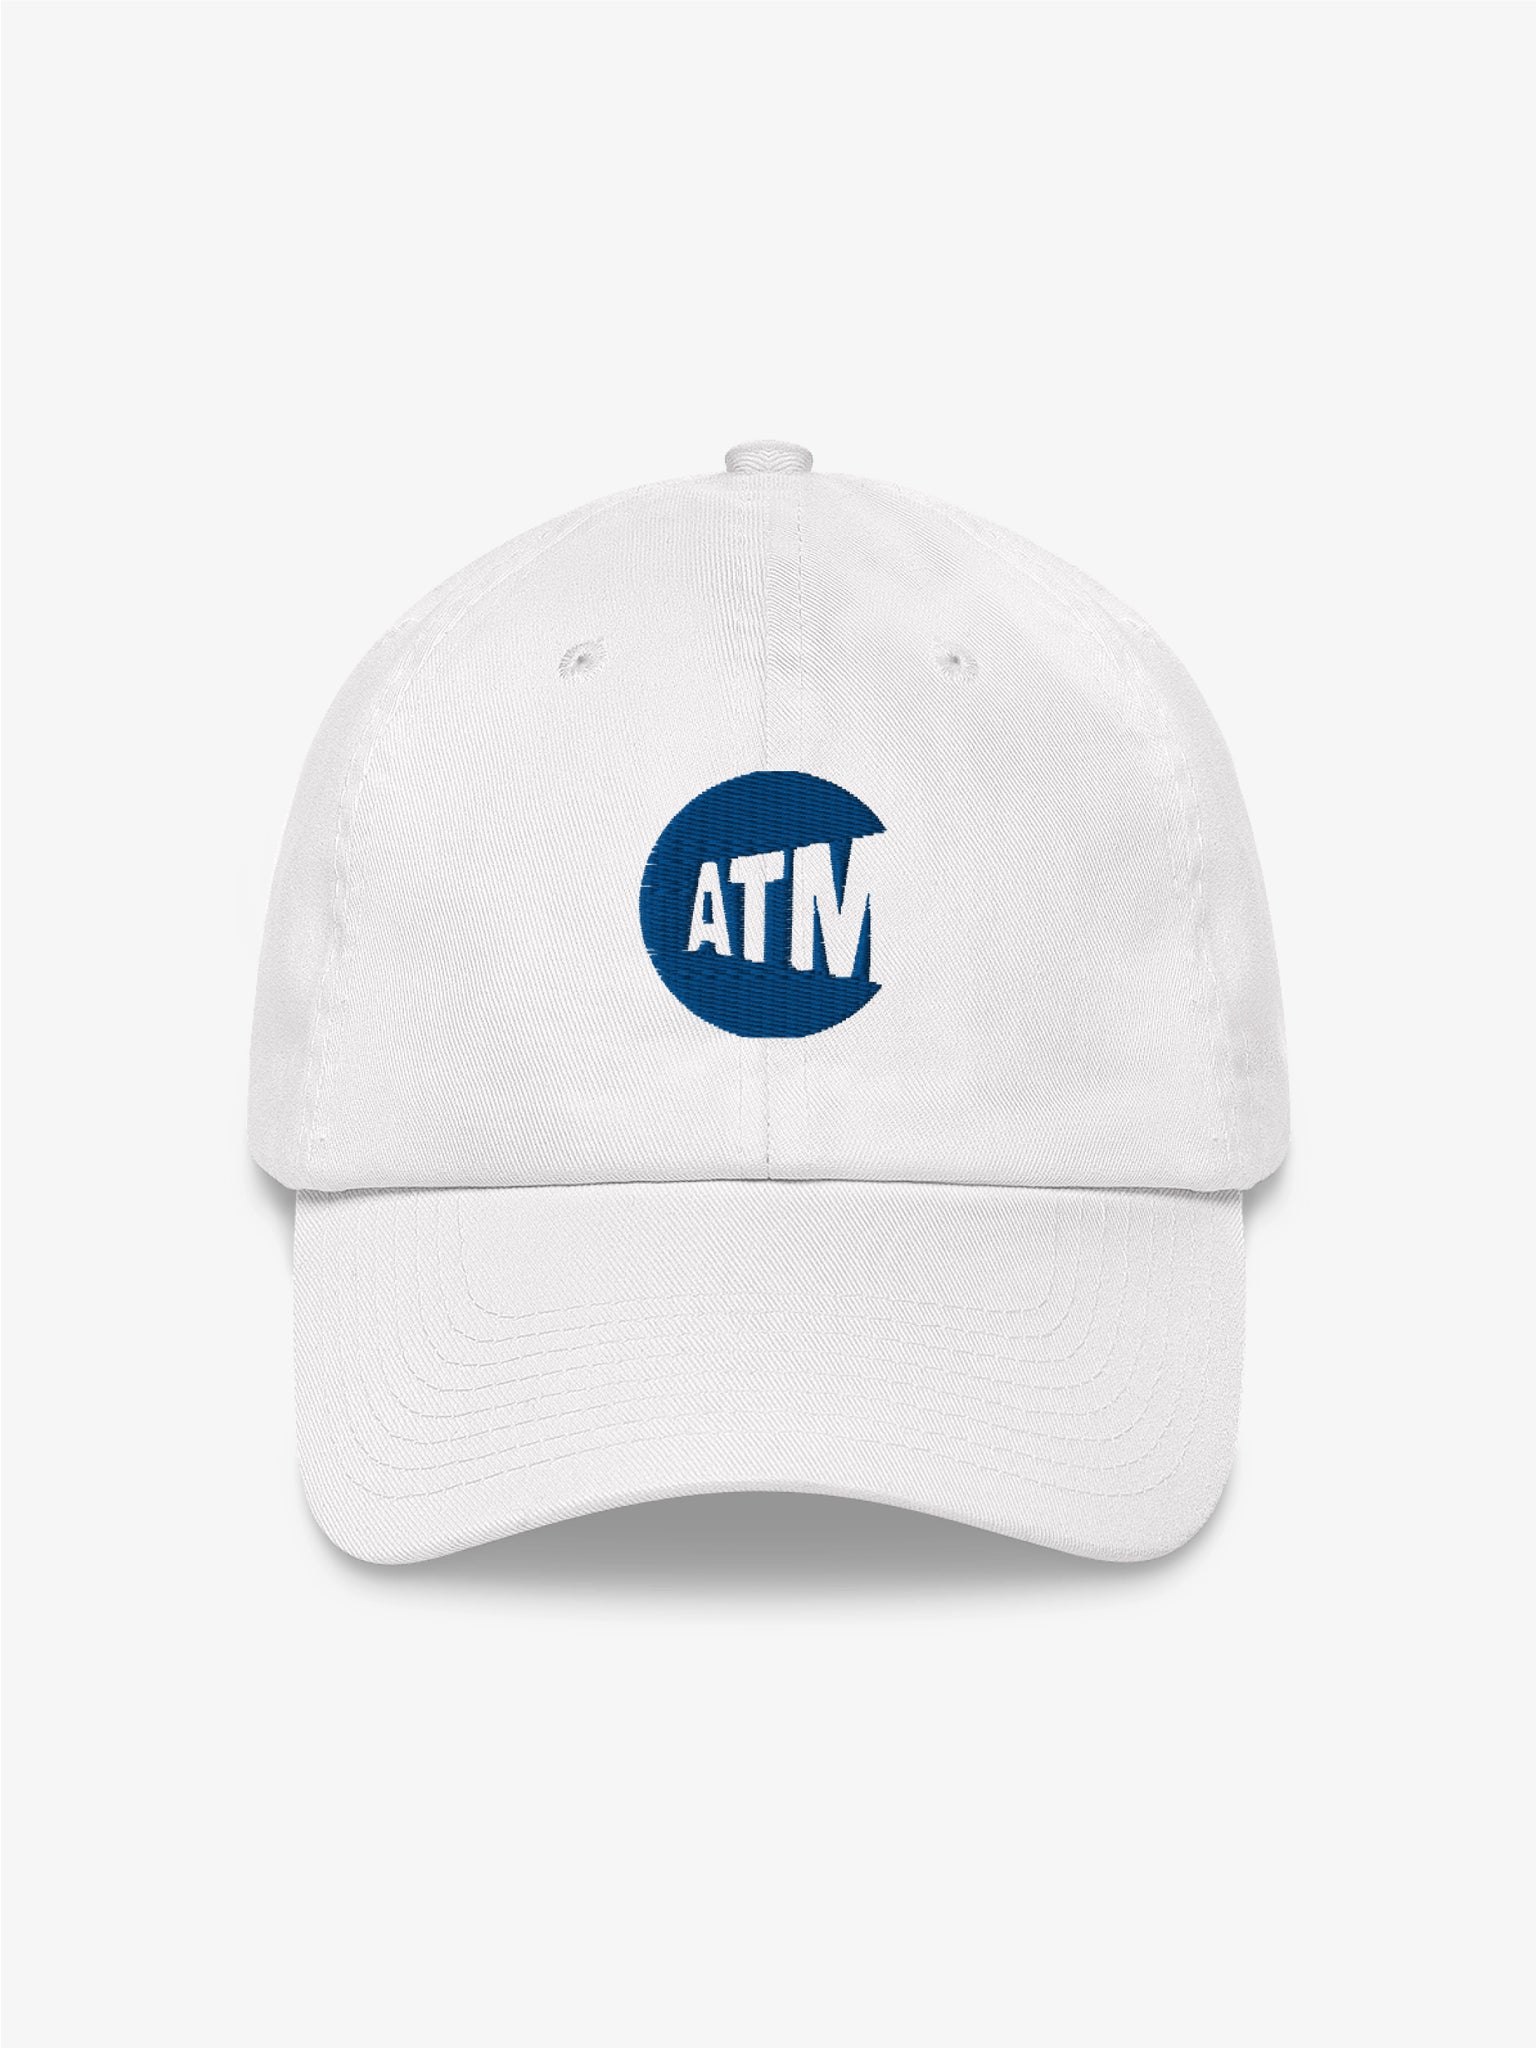 ATM Cash Only Cap - White